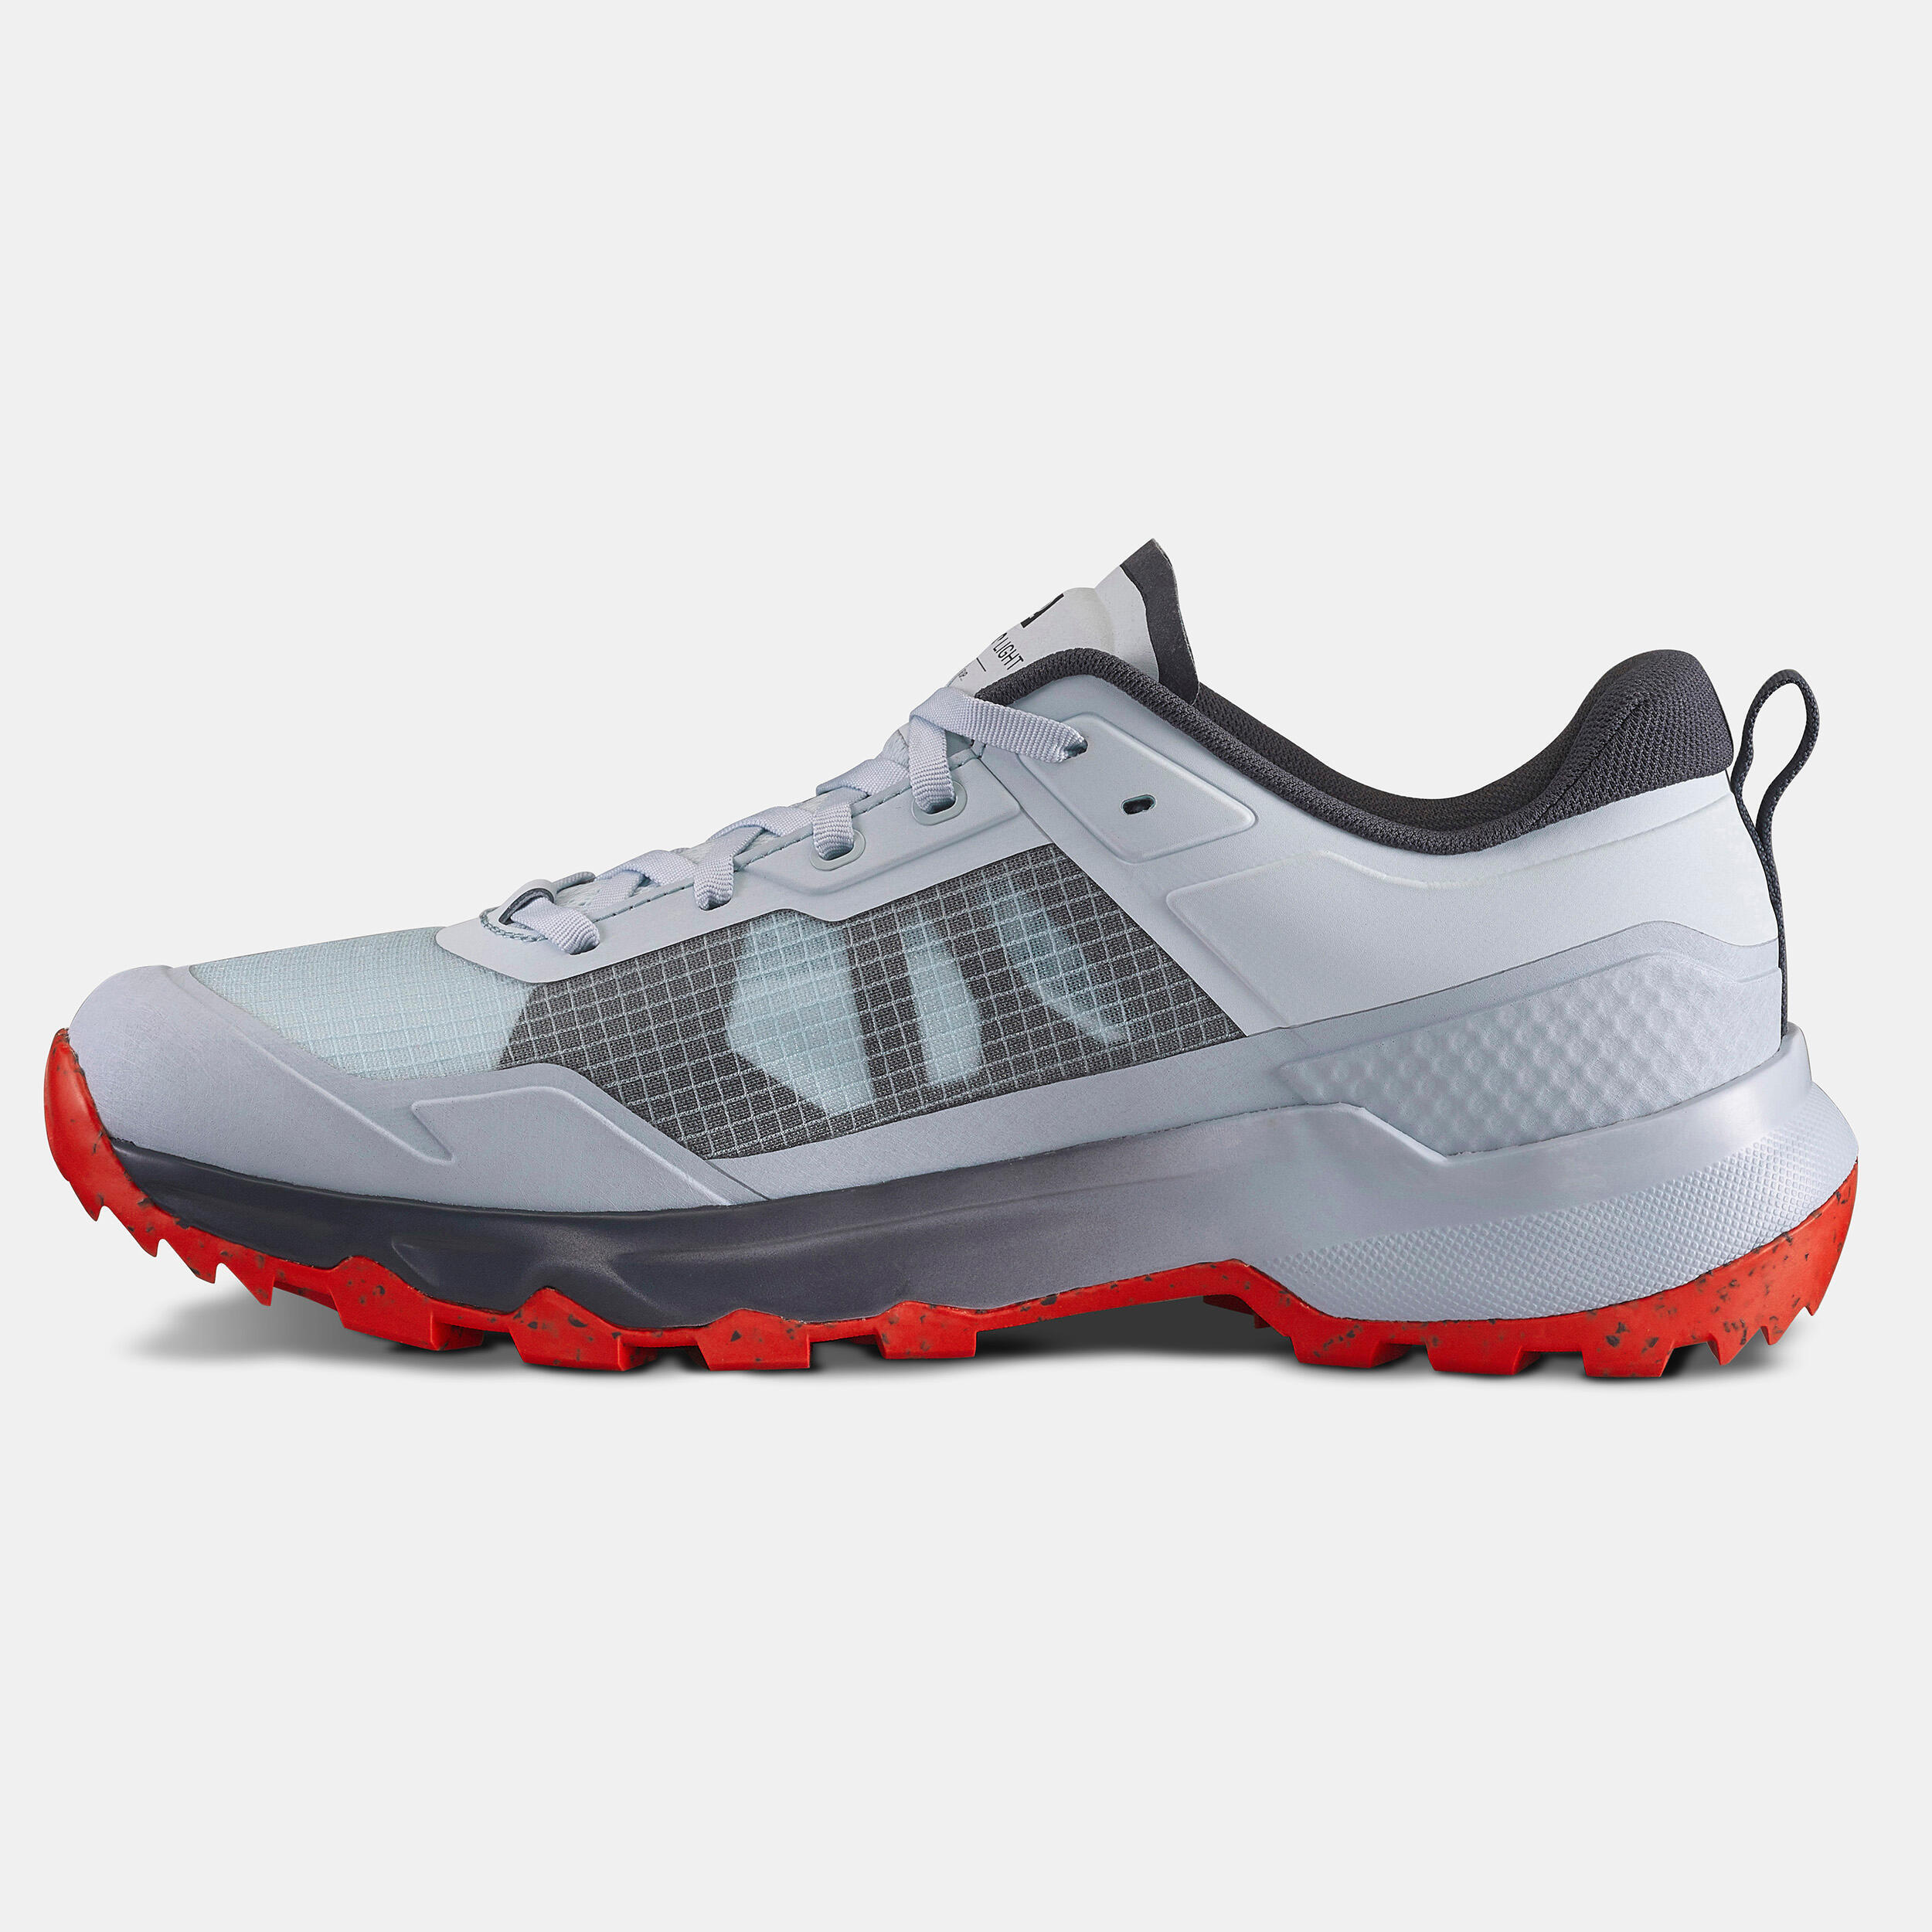 Men’s mountain Hiking Shoes - MH500 LIGHT - Light Grey 6/8